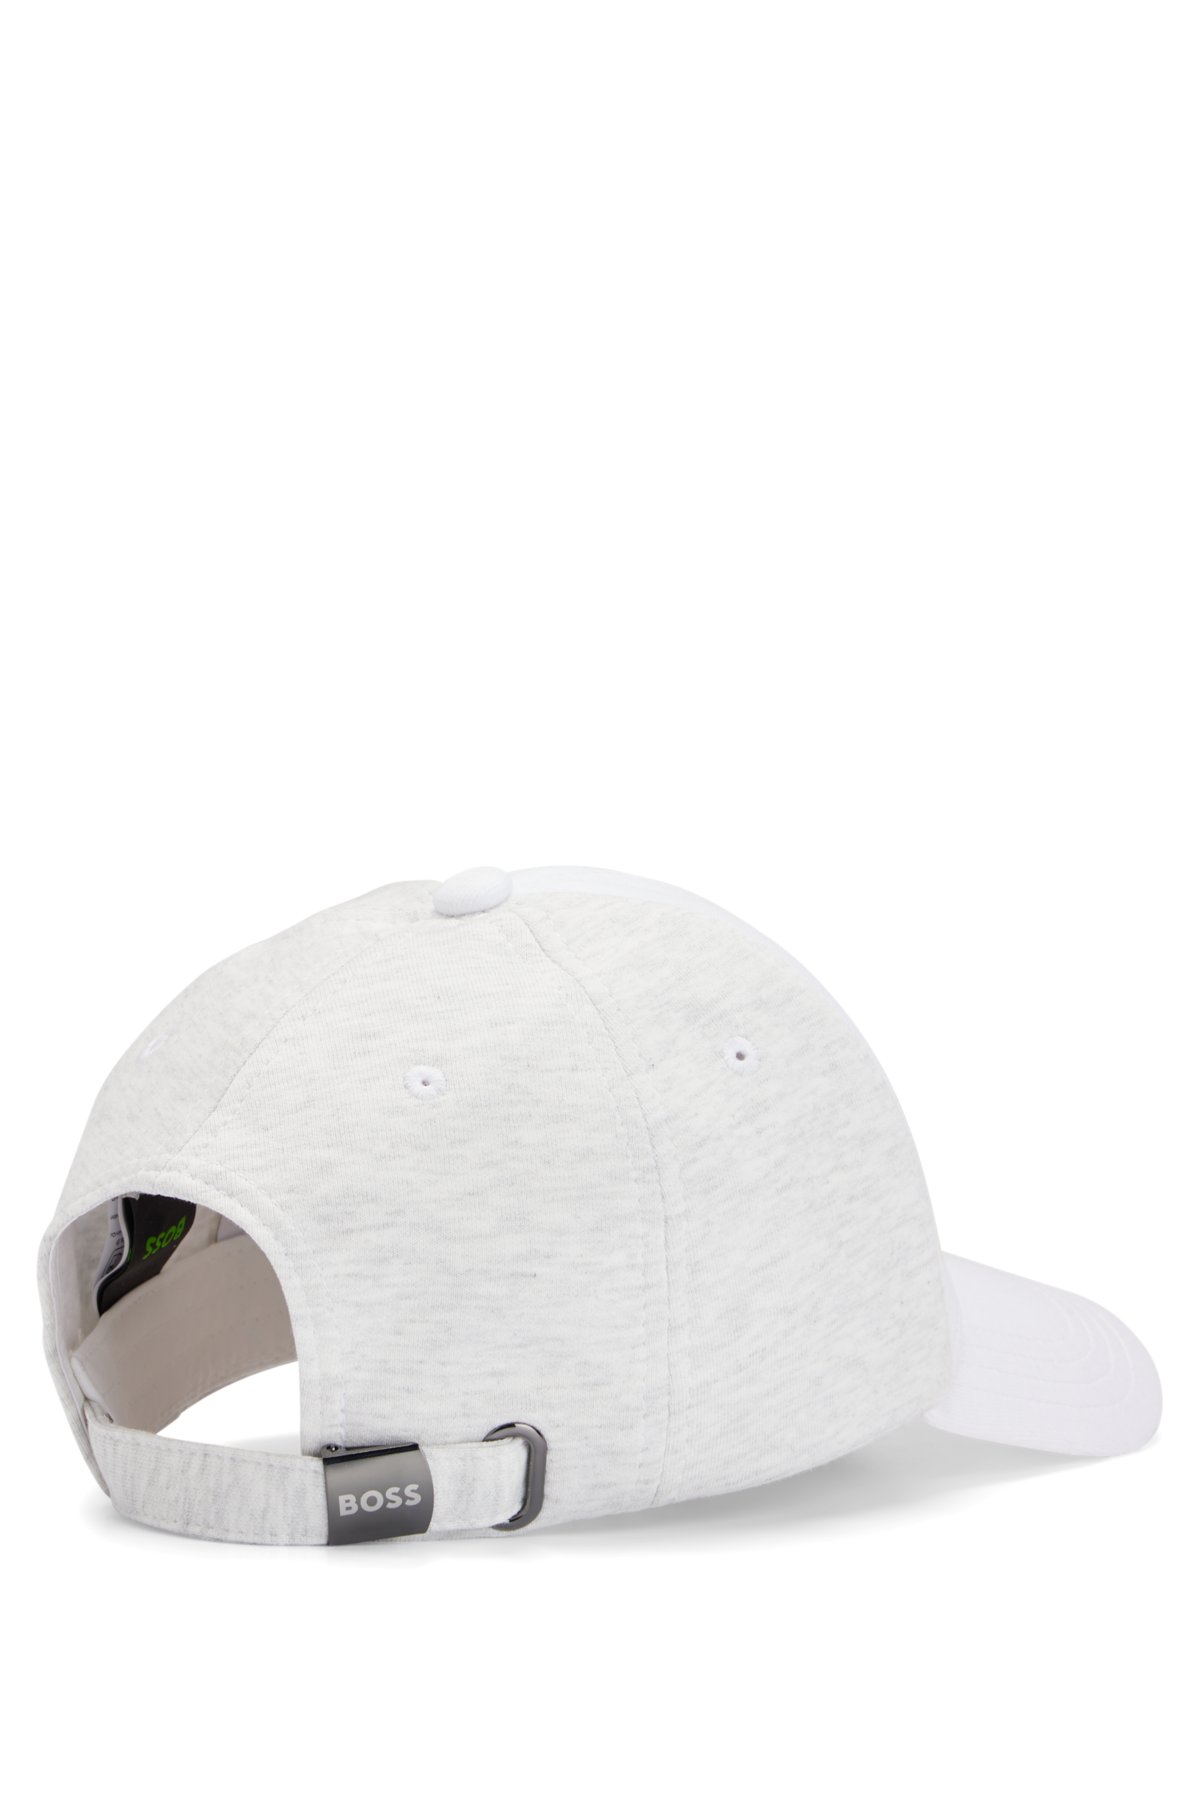 - contrast Cotton-blend five-panel BOSS cap logo with